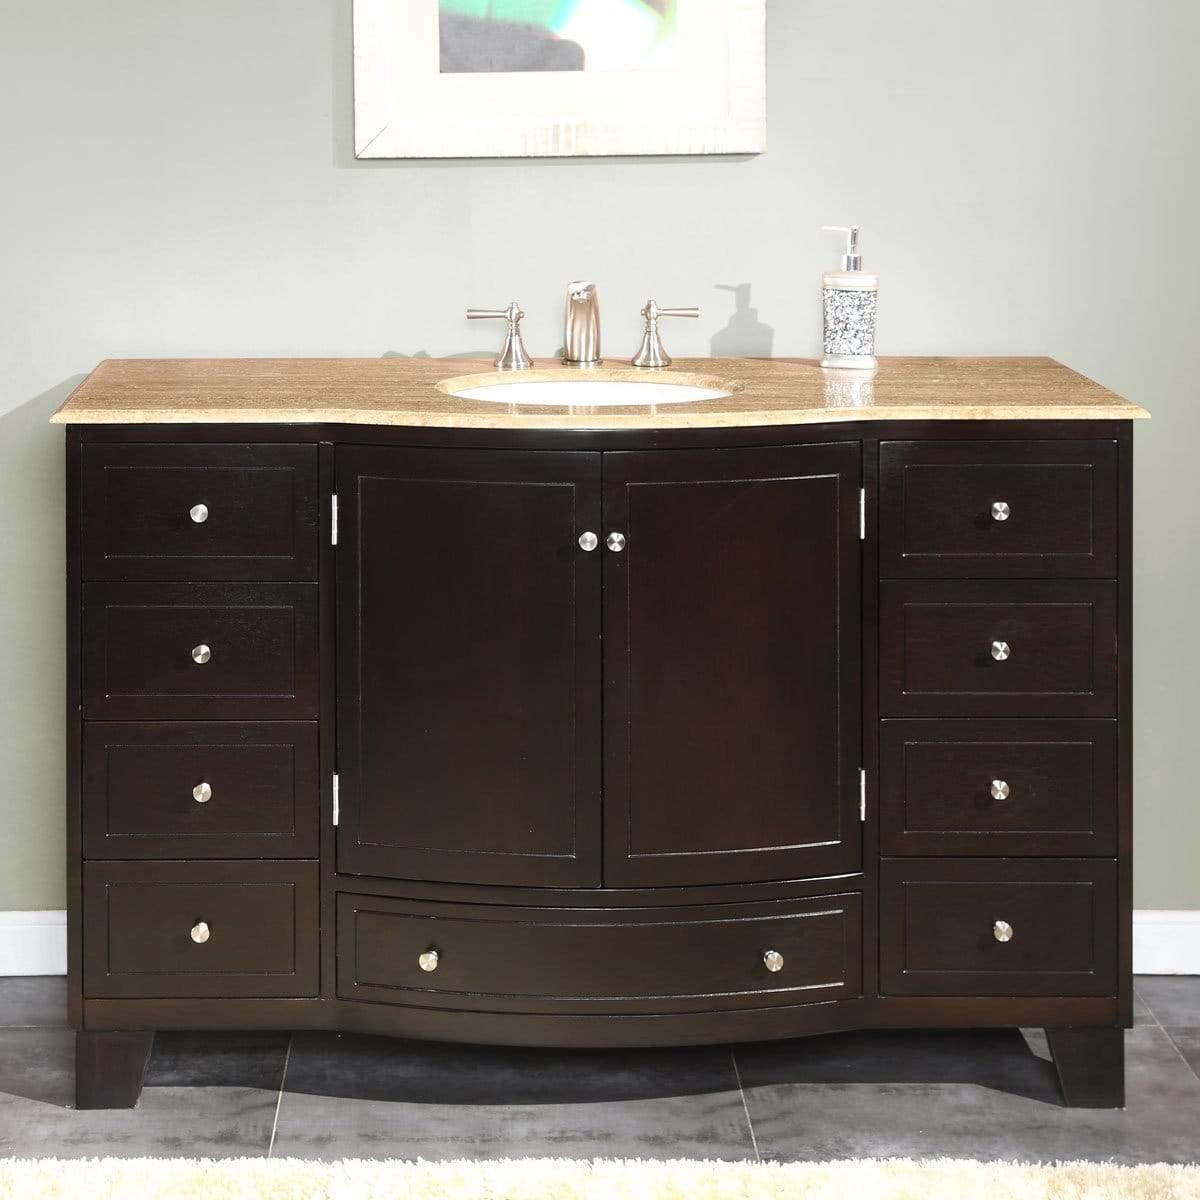 Organize with silkroad exclusive hyp 0703 t uwc 55 travertine top single white sink bathroom vanity with espresso cabinet 55 dark wood